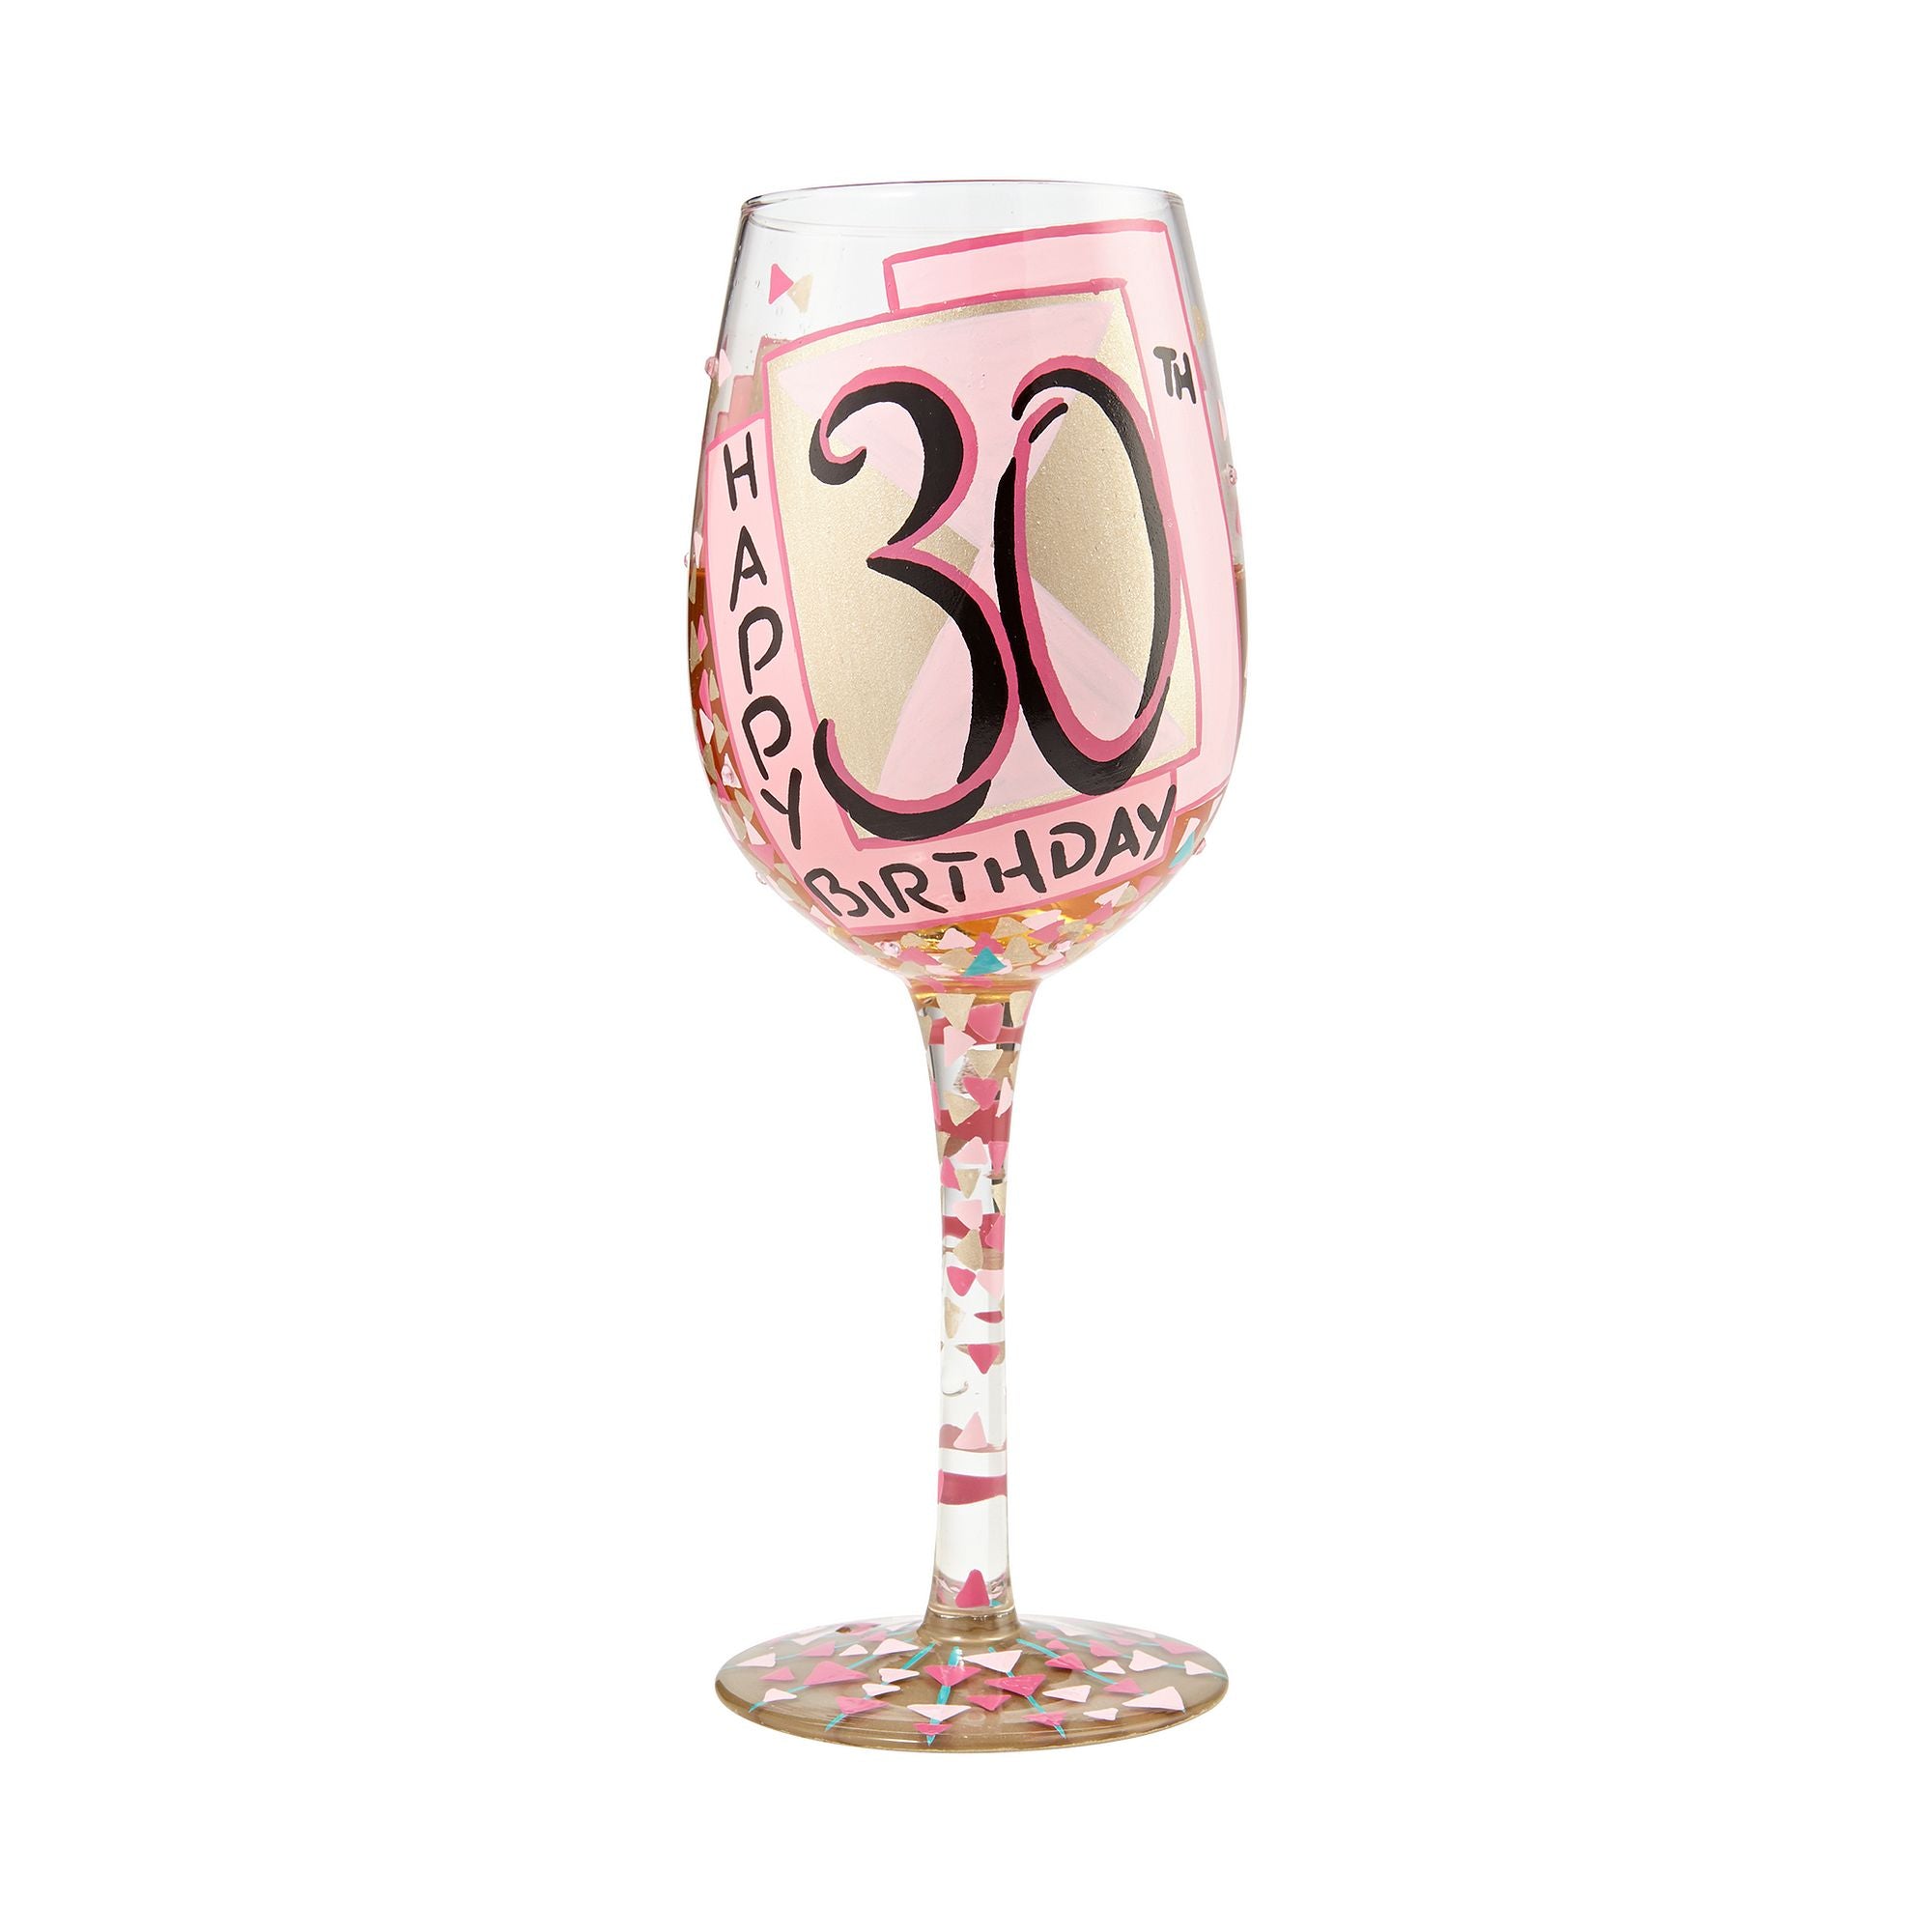 30th wine glass